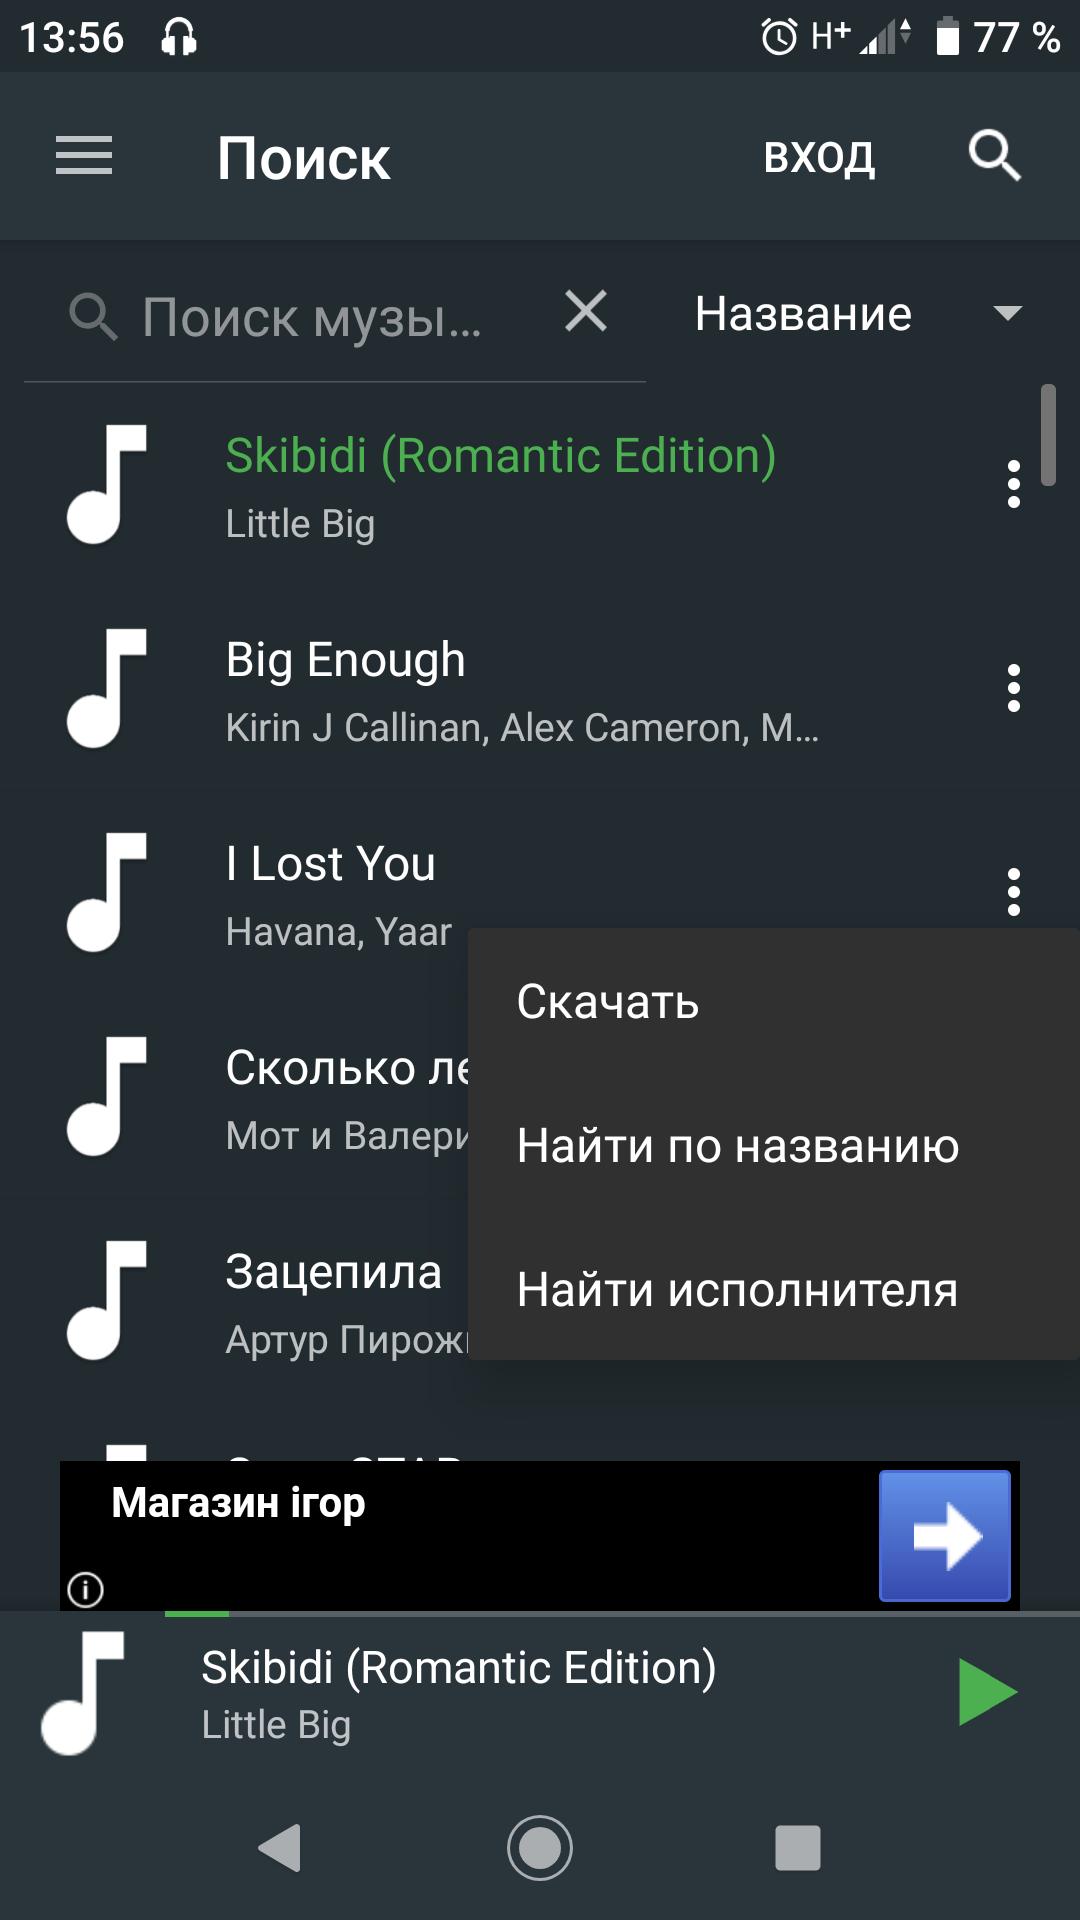 J Player - Скачать Музыку Бесплатно MP3 For Android - APK Download